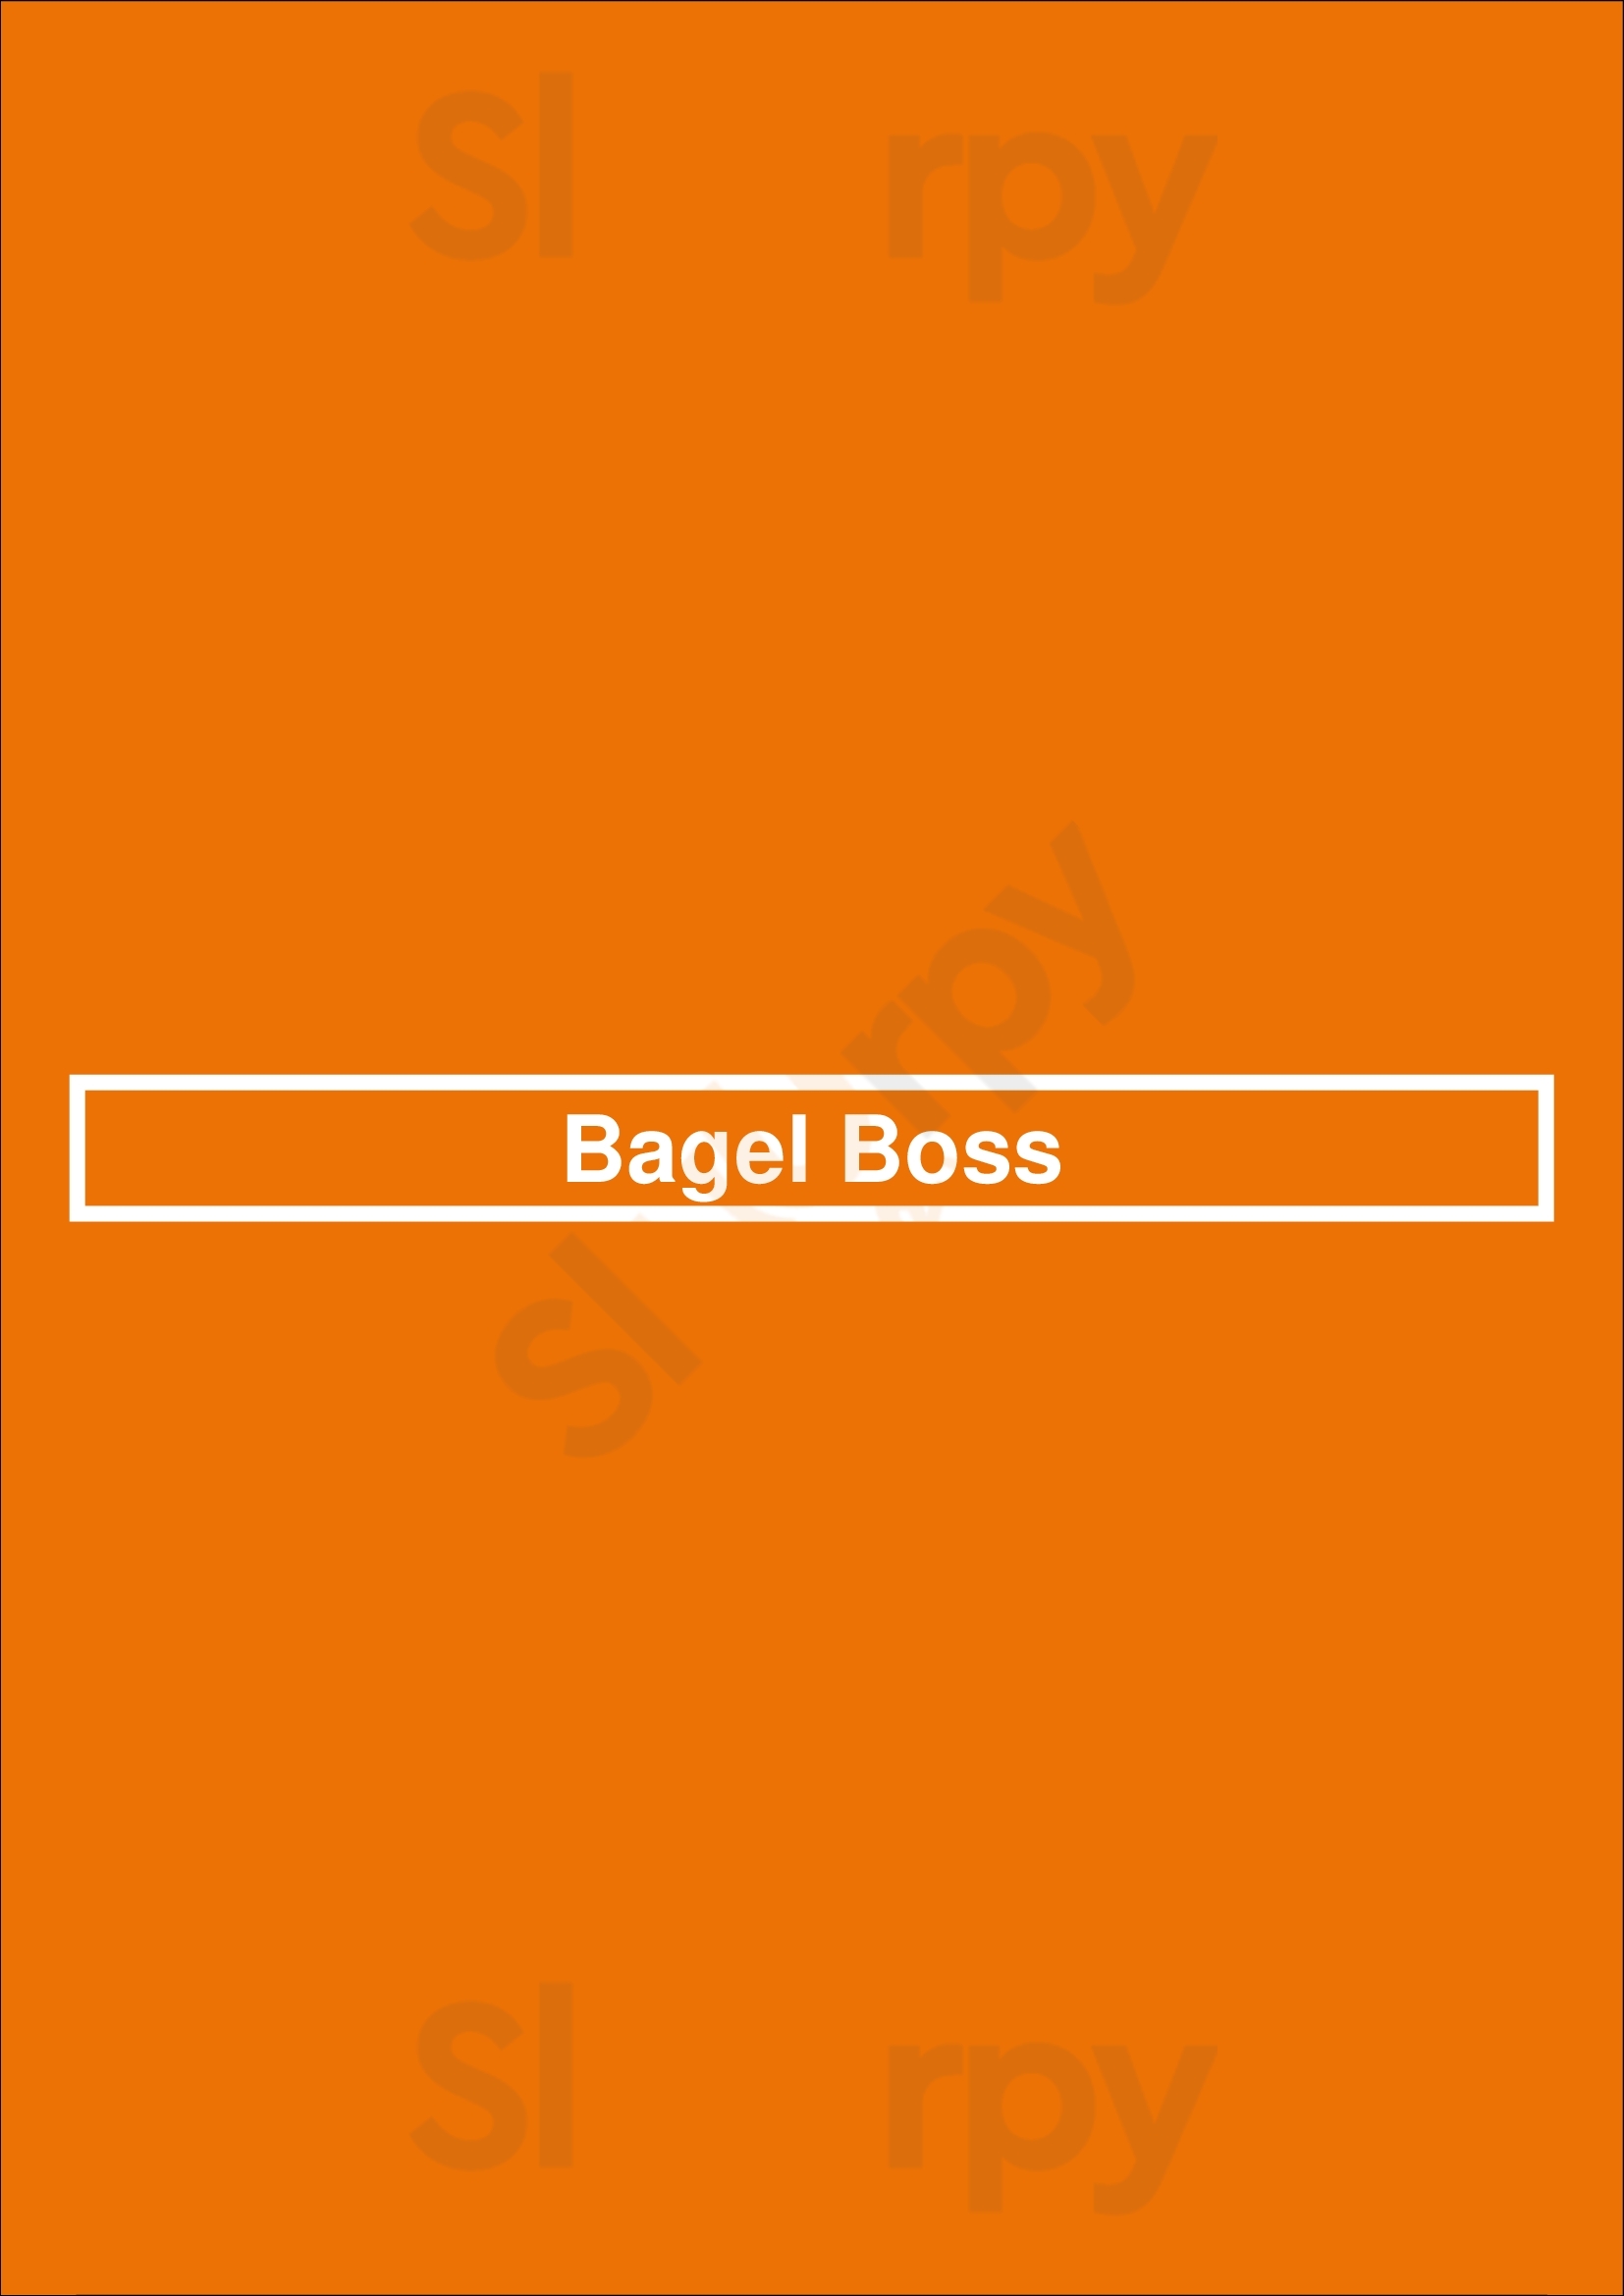 Bagel Boss Of East Northport East Northport Menu - 1